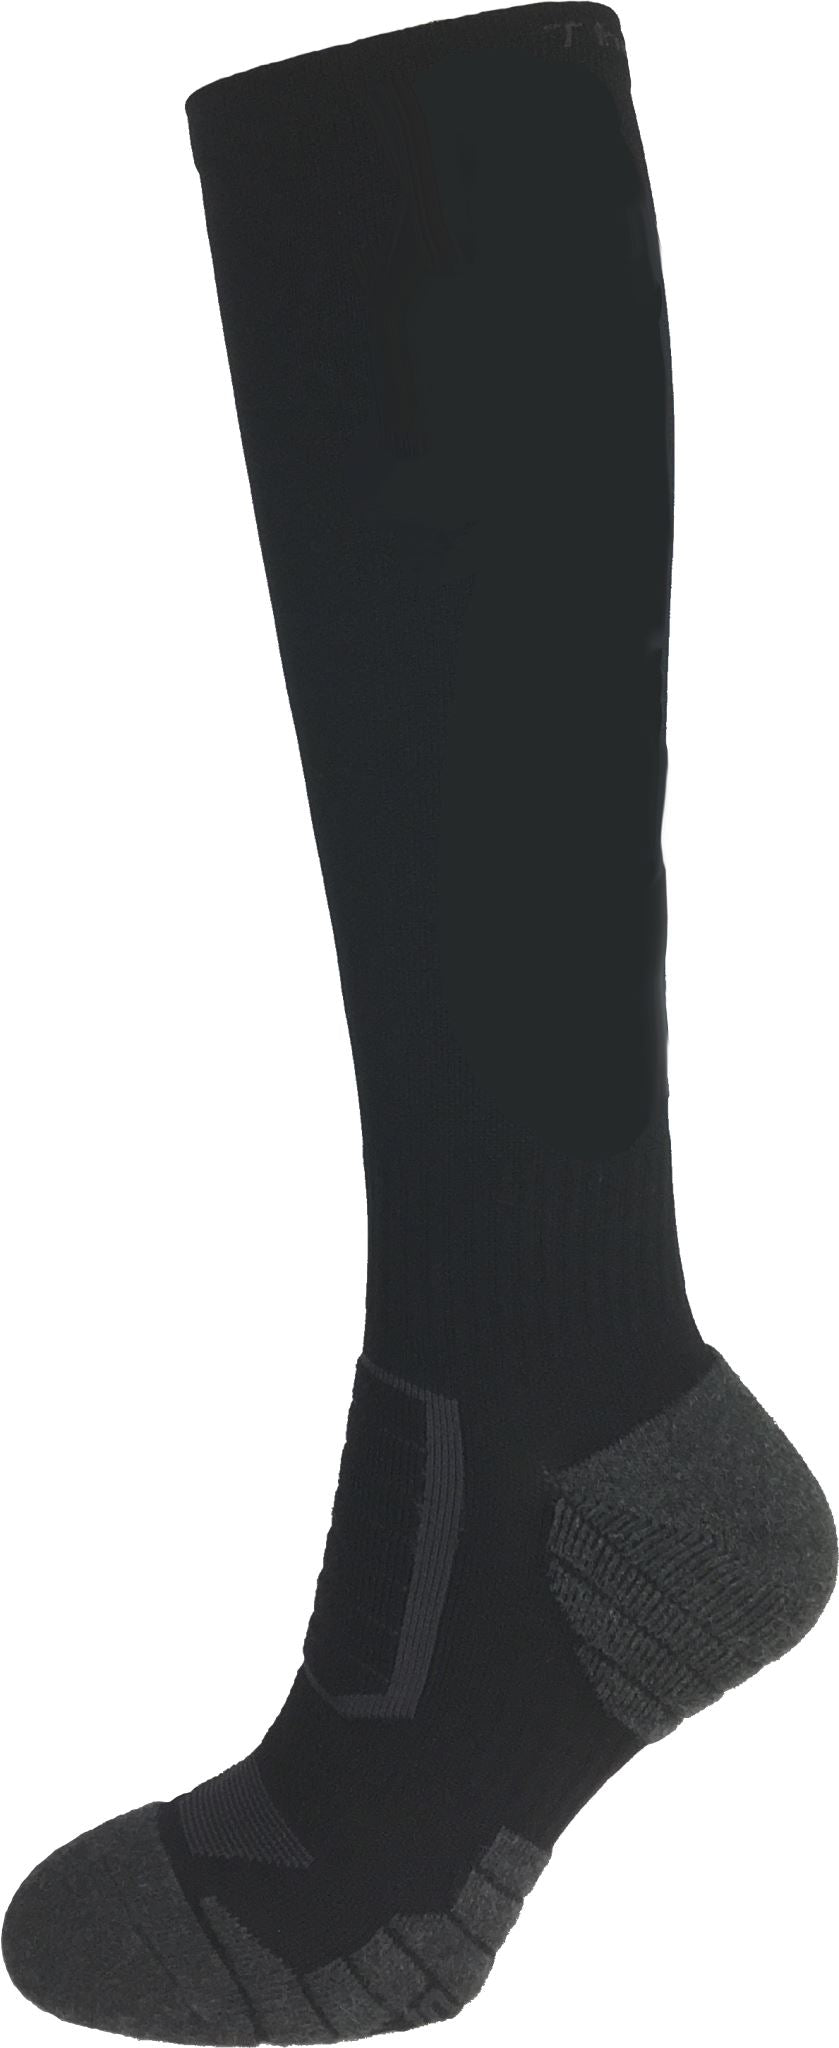 Thermatech Compression Socks, Black/Grey, Size US 6-10 T28U